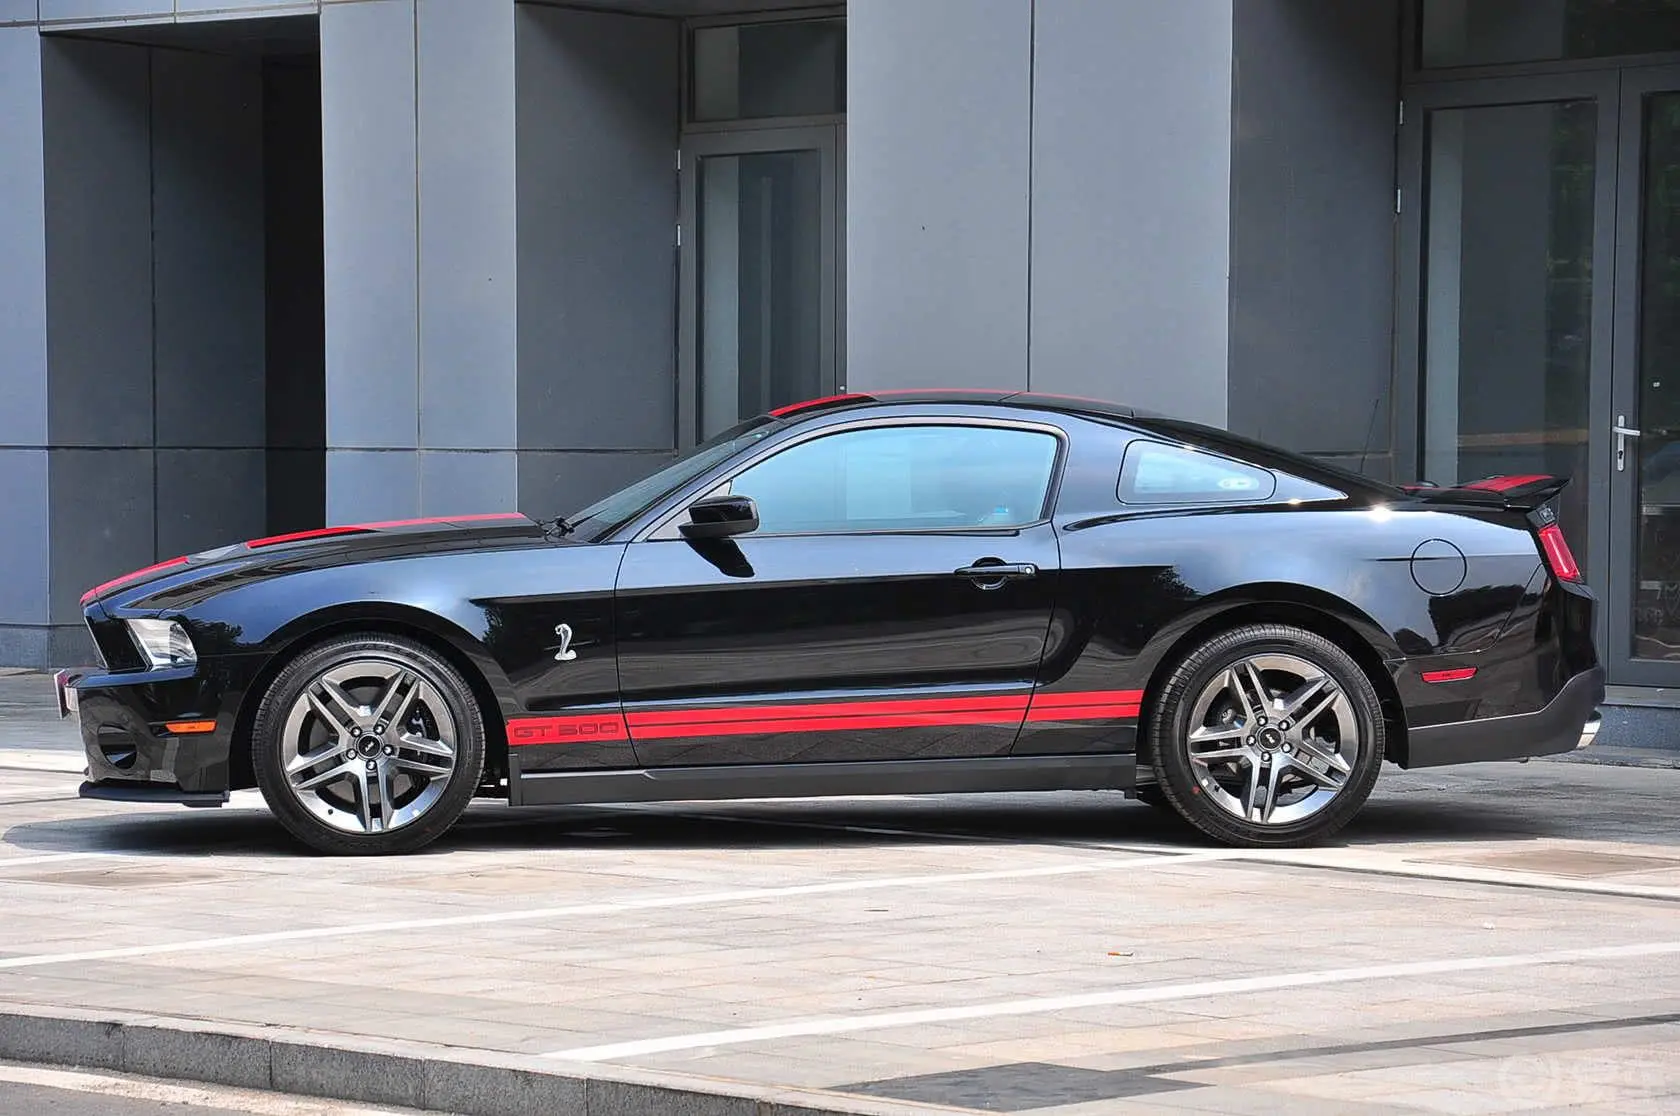 Mustang5.4L 手动 SHELBY GT500 硬顶正侧车头向左水平